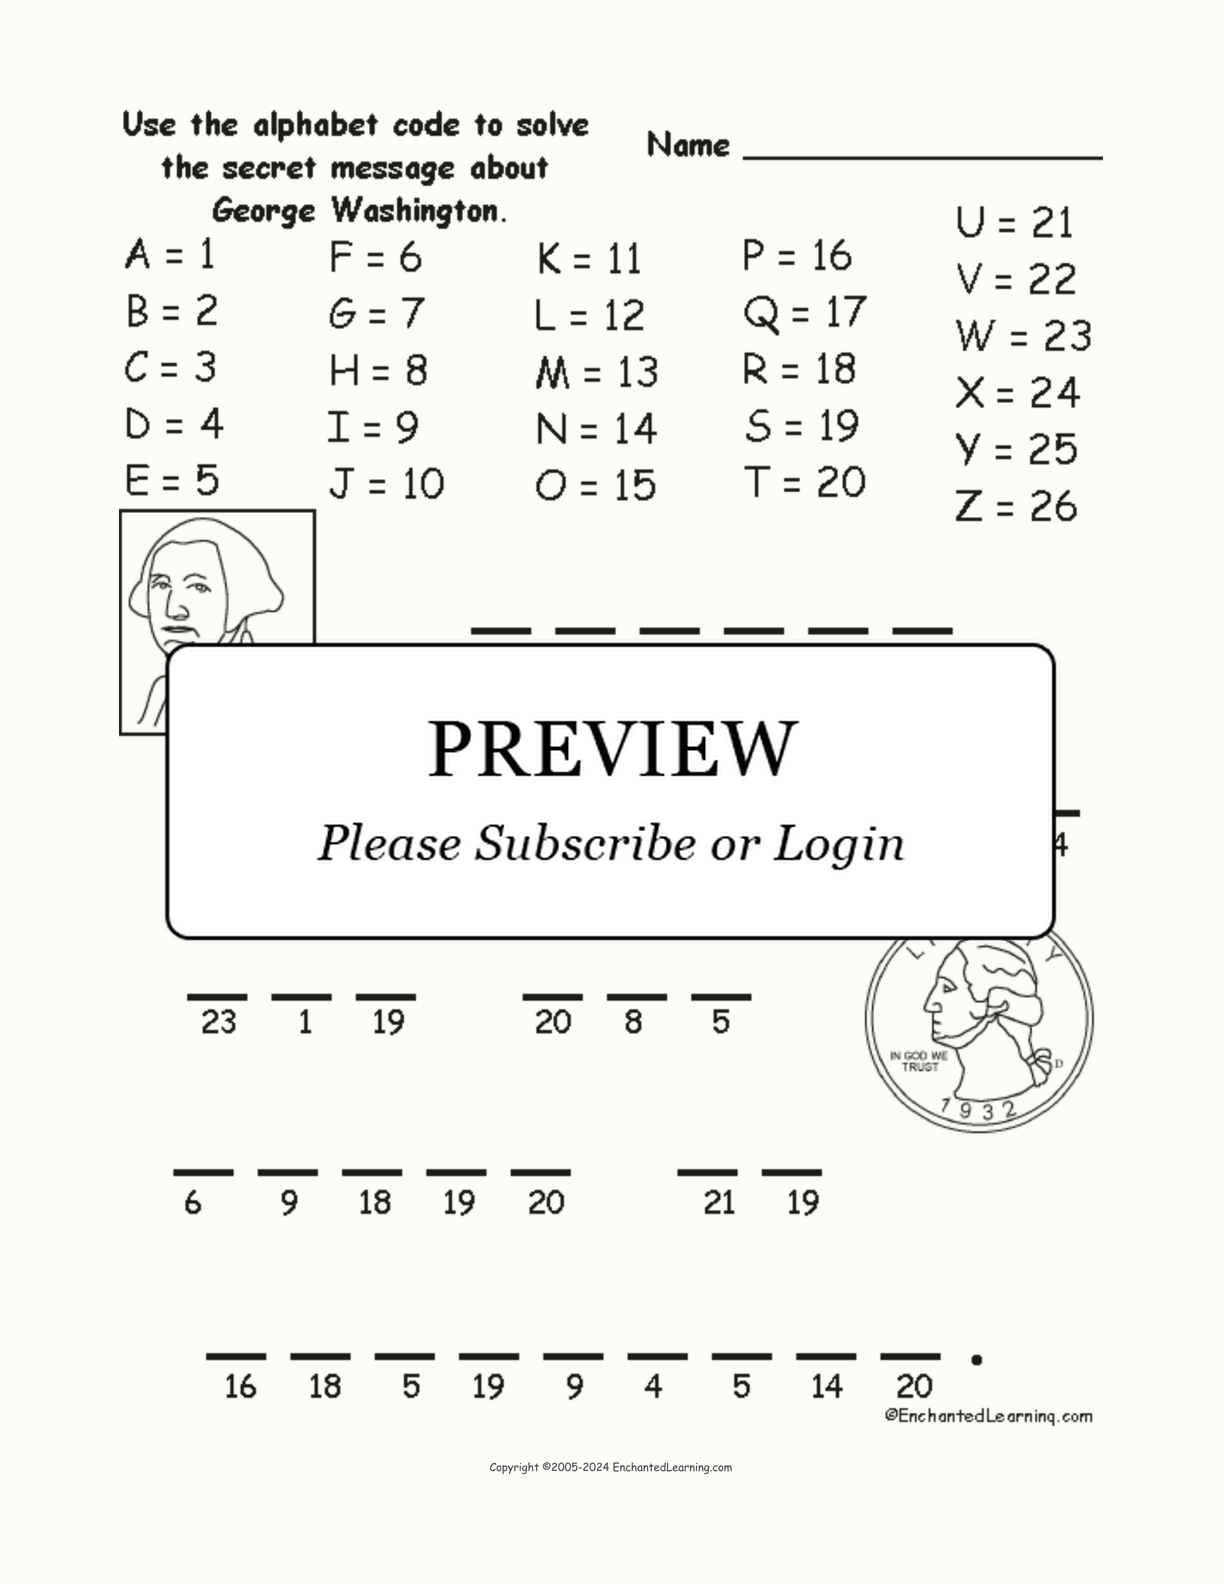 George Washington Alphabet Code interactive worksheet page 1